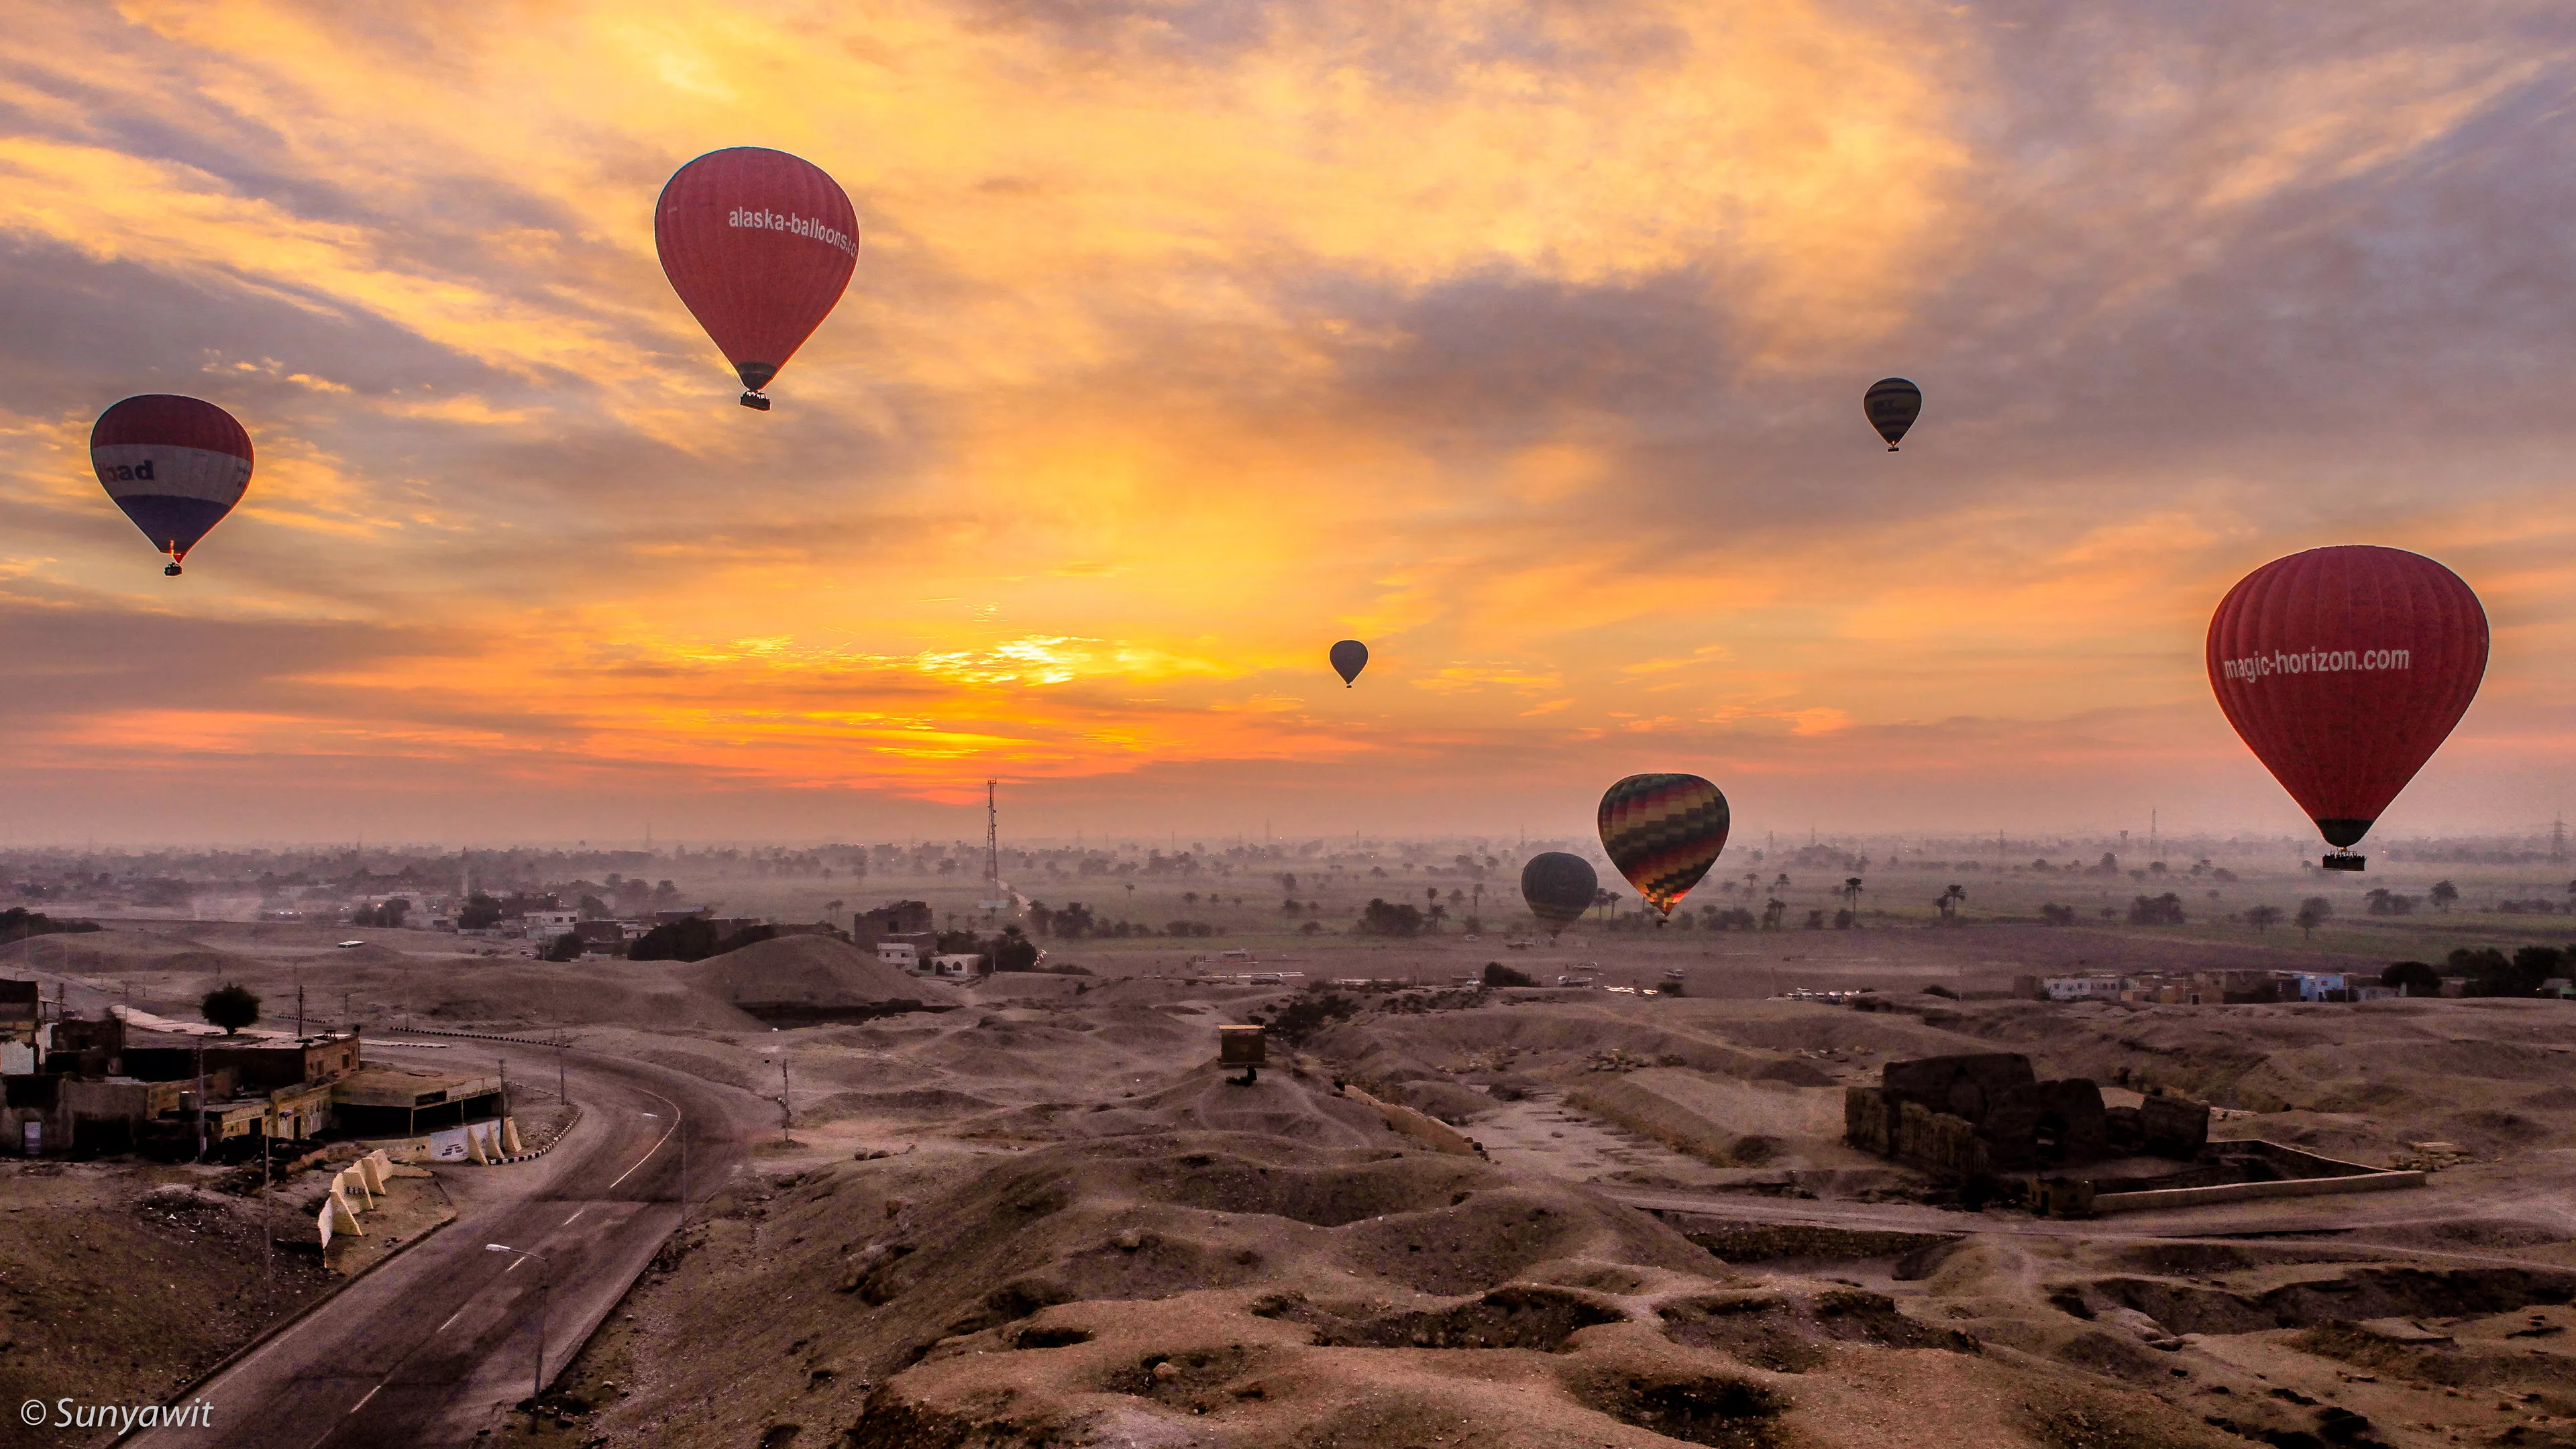 Magic Horizon Hot Air Balloons in Egypt, Africa | Hot Air Ballooning - Rated 4.3